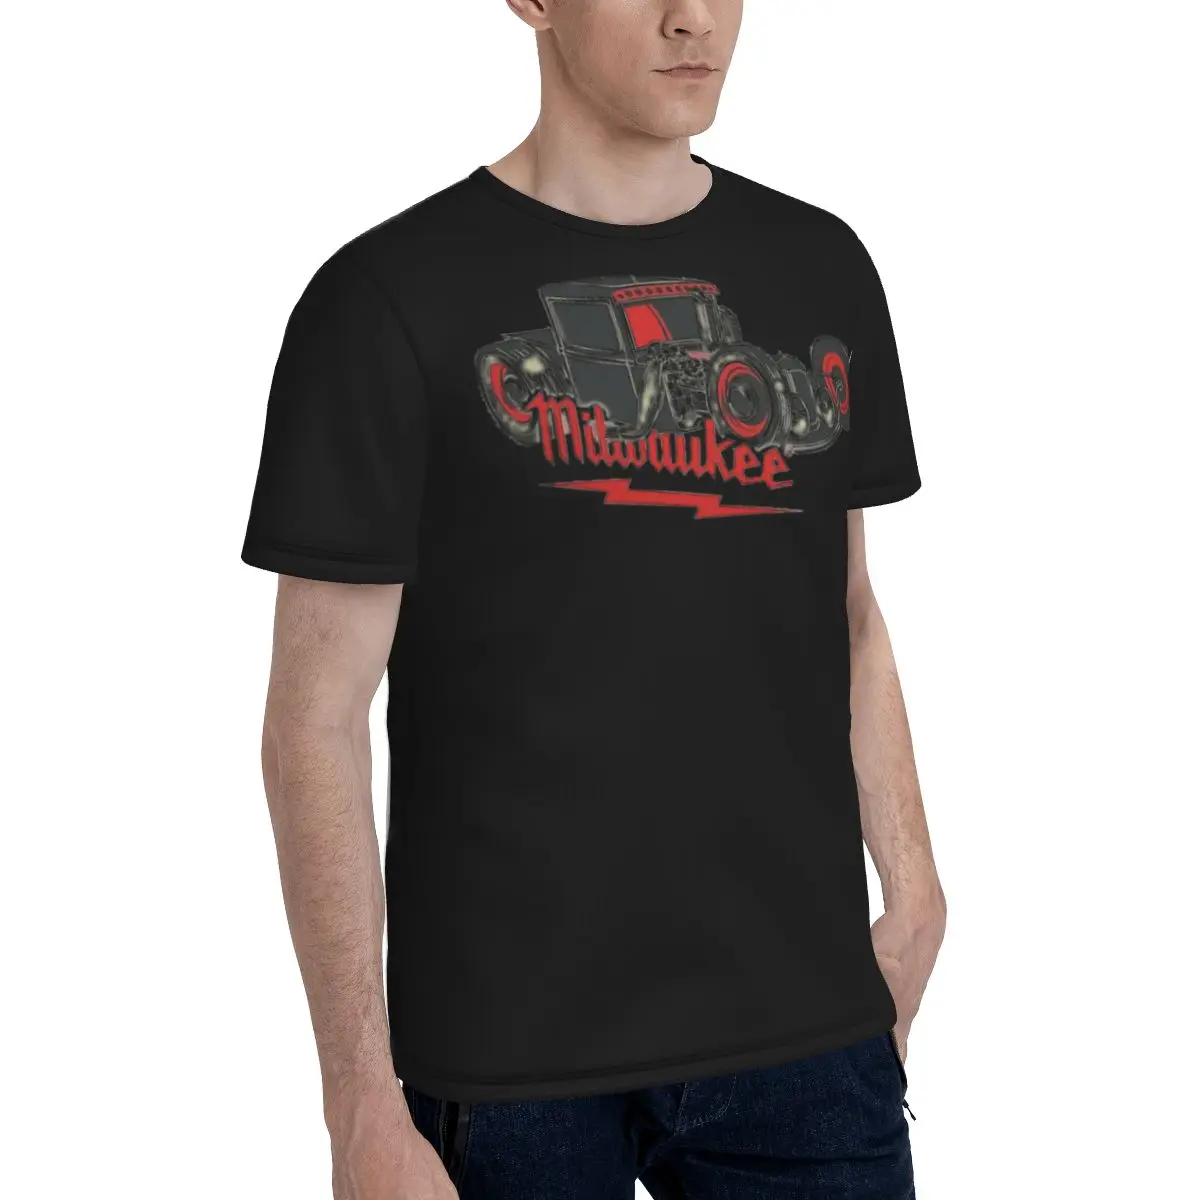 Promo Baseball Milwaukees Tools Tools T-shirt Cute Men's T Shirt Print Humor Graphic R258 Tops Tees European Size